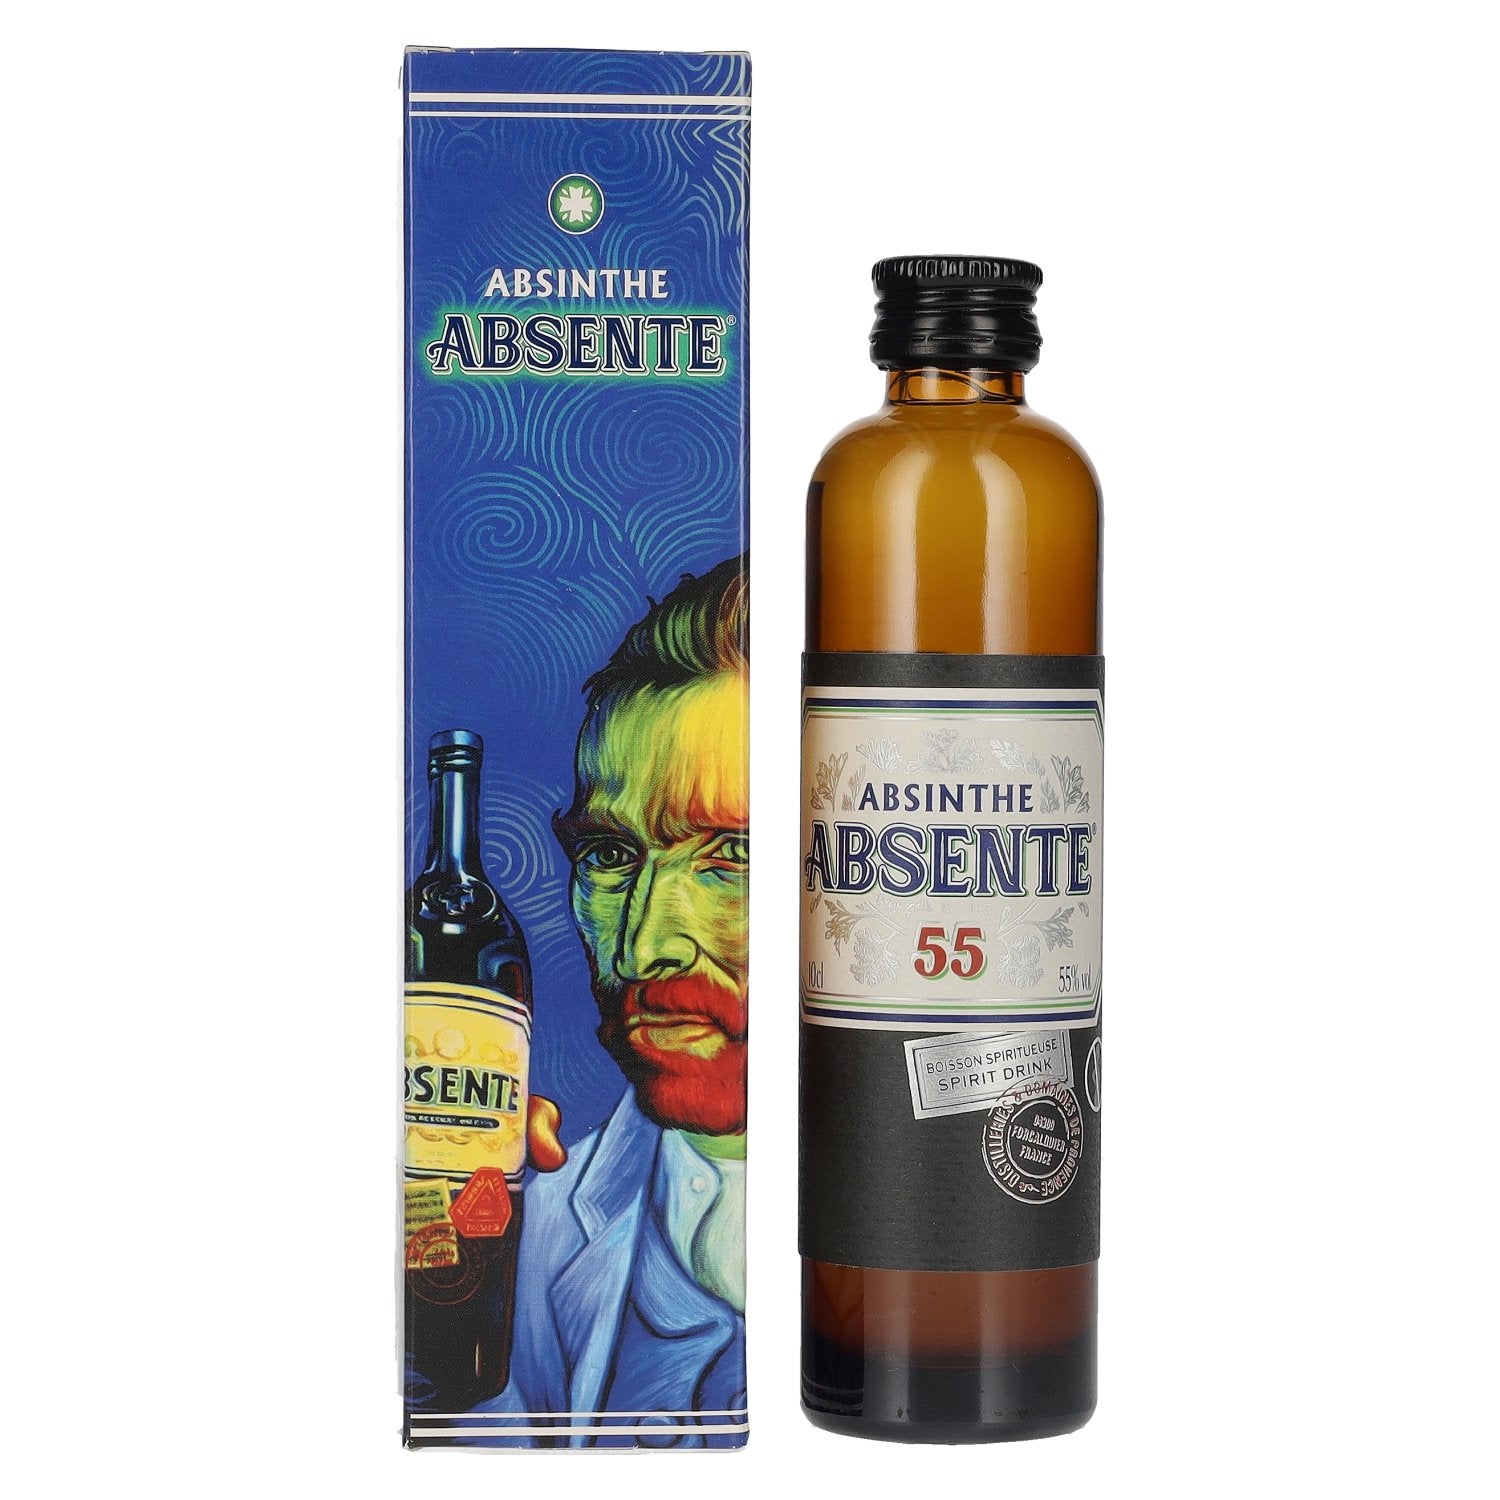 Absente Absinthe 55% Vol. 0,1l in Giftbox